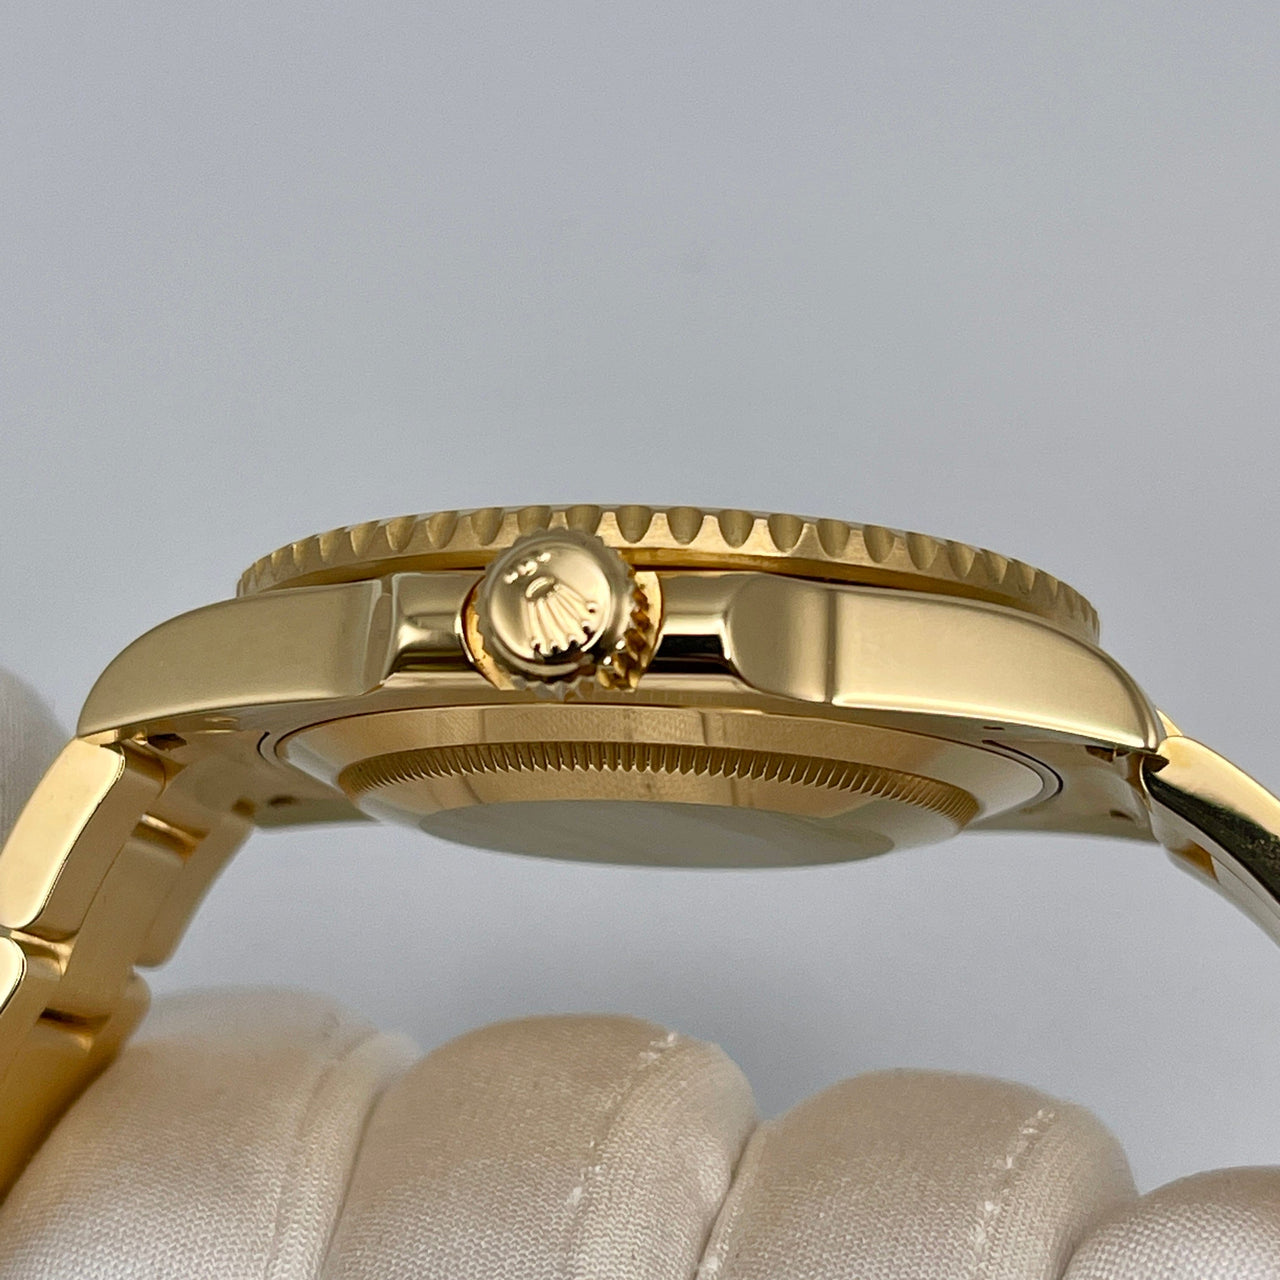 Rolex Submariner Date 40 Yellow Gold Black Dial 116618LN wrist aficionado